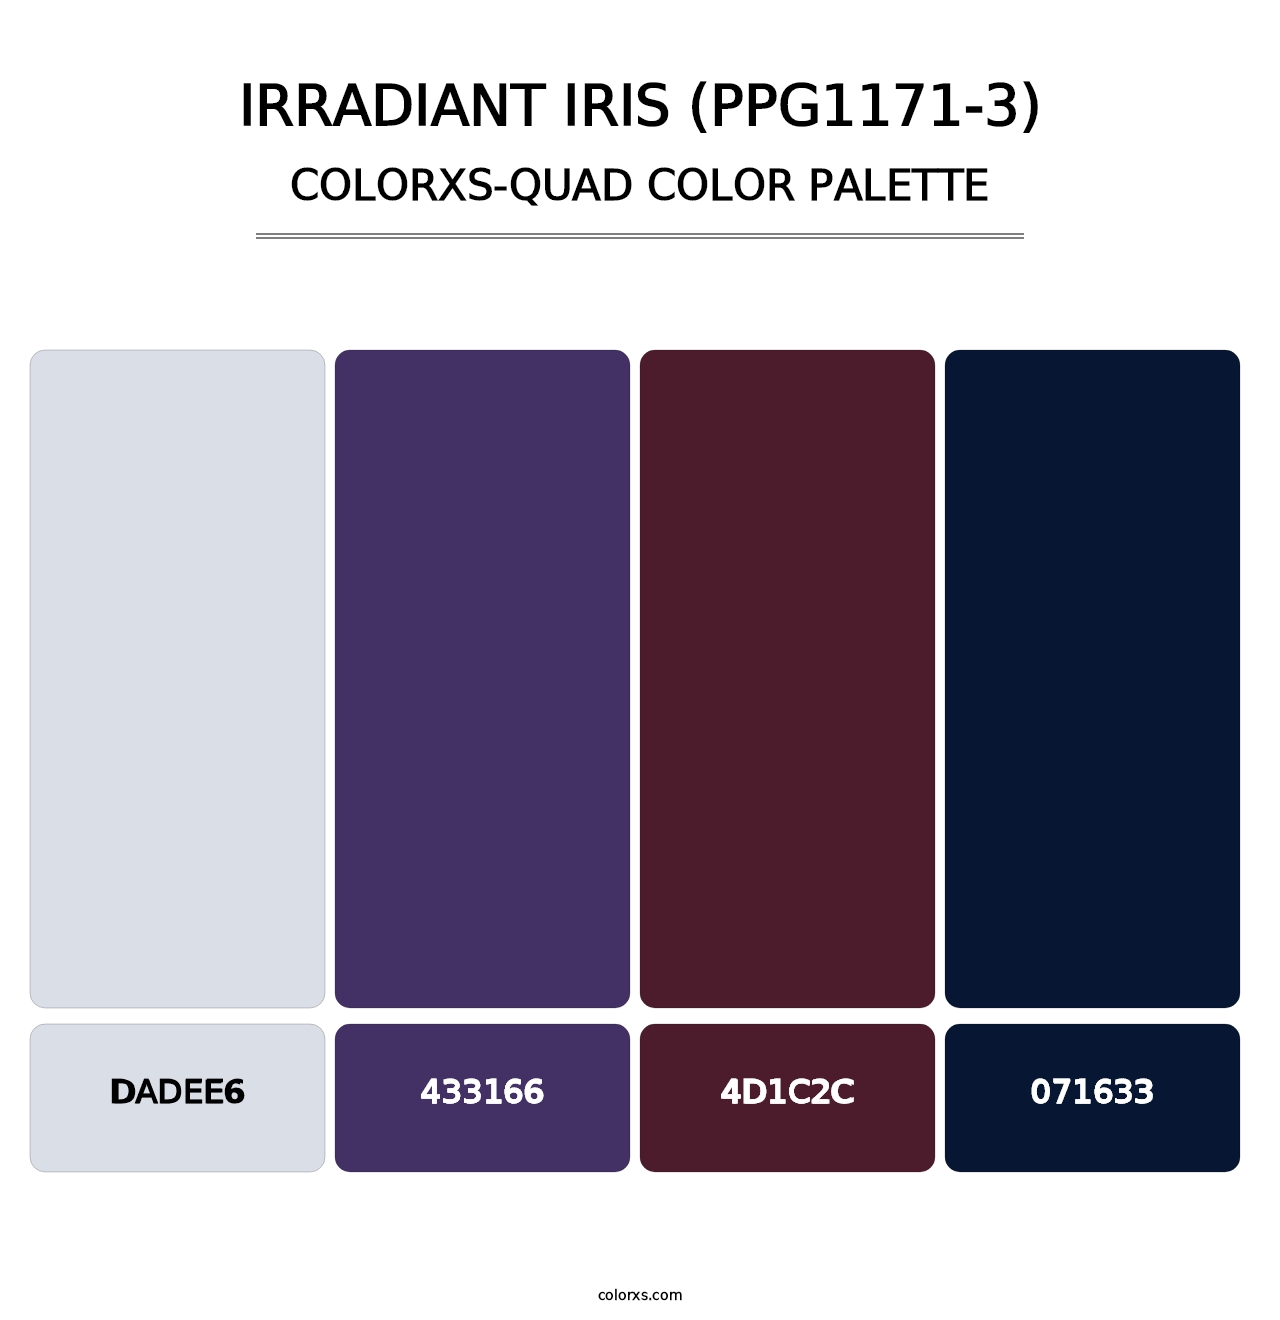 Irradiant Iris (PPG1171-3) - Colorxs Quad Palette